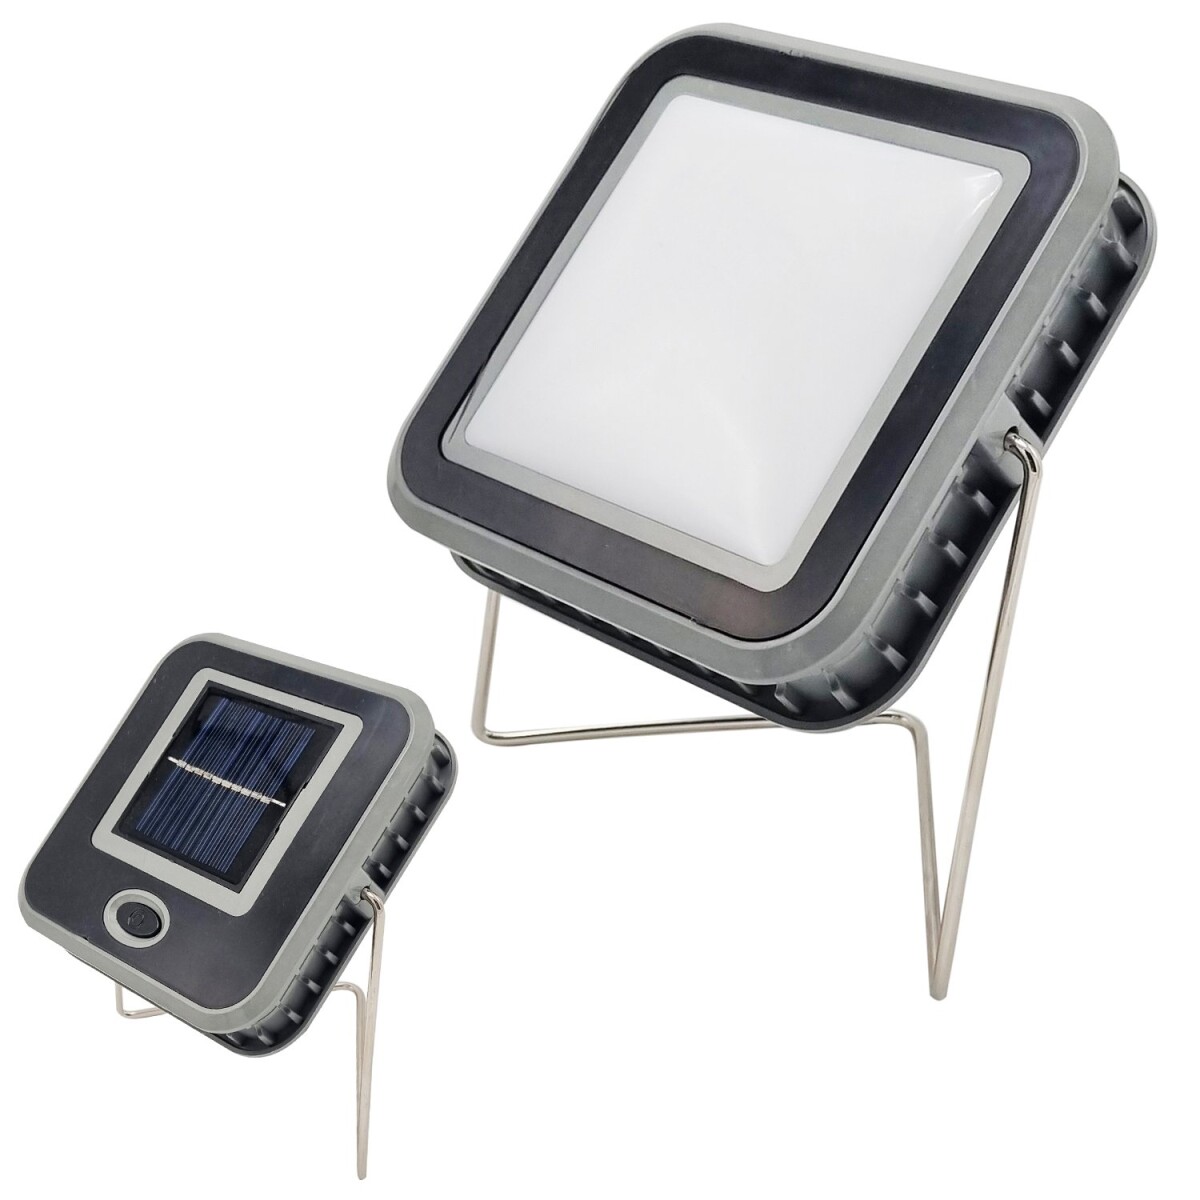 Lampara Foco Solar Farol Led USB Camping Hengluge + Base - Variante Color Negro 